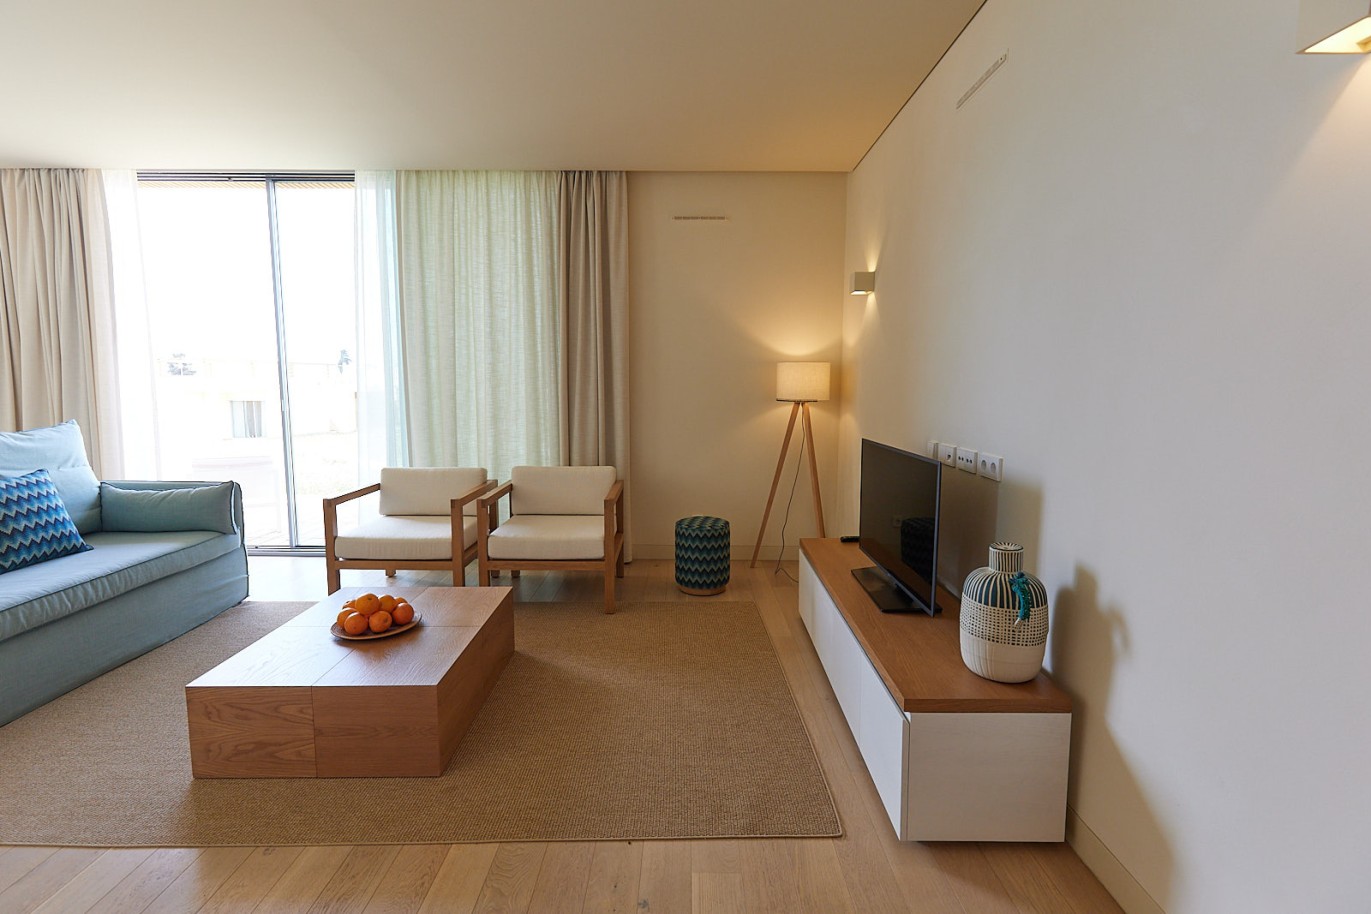 2 bedroom apartment in resort, for sale in Porches, Algarve_230553